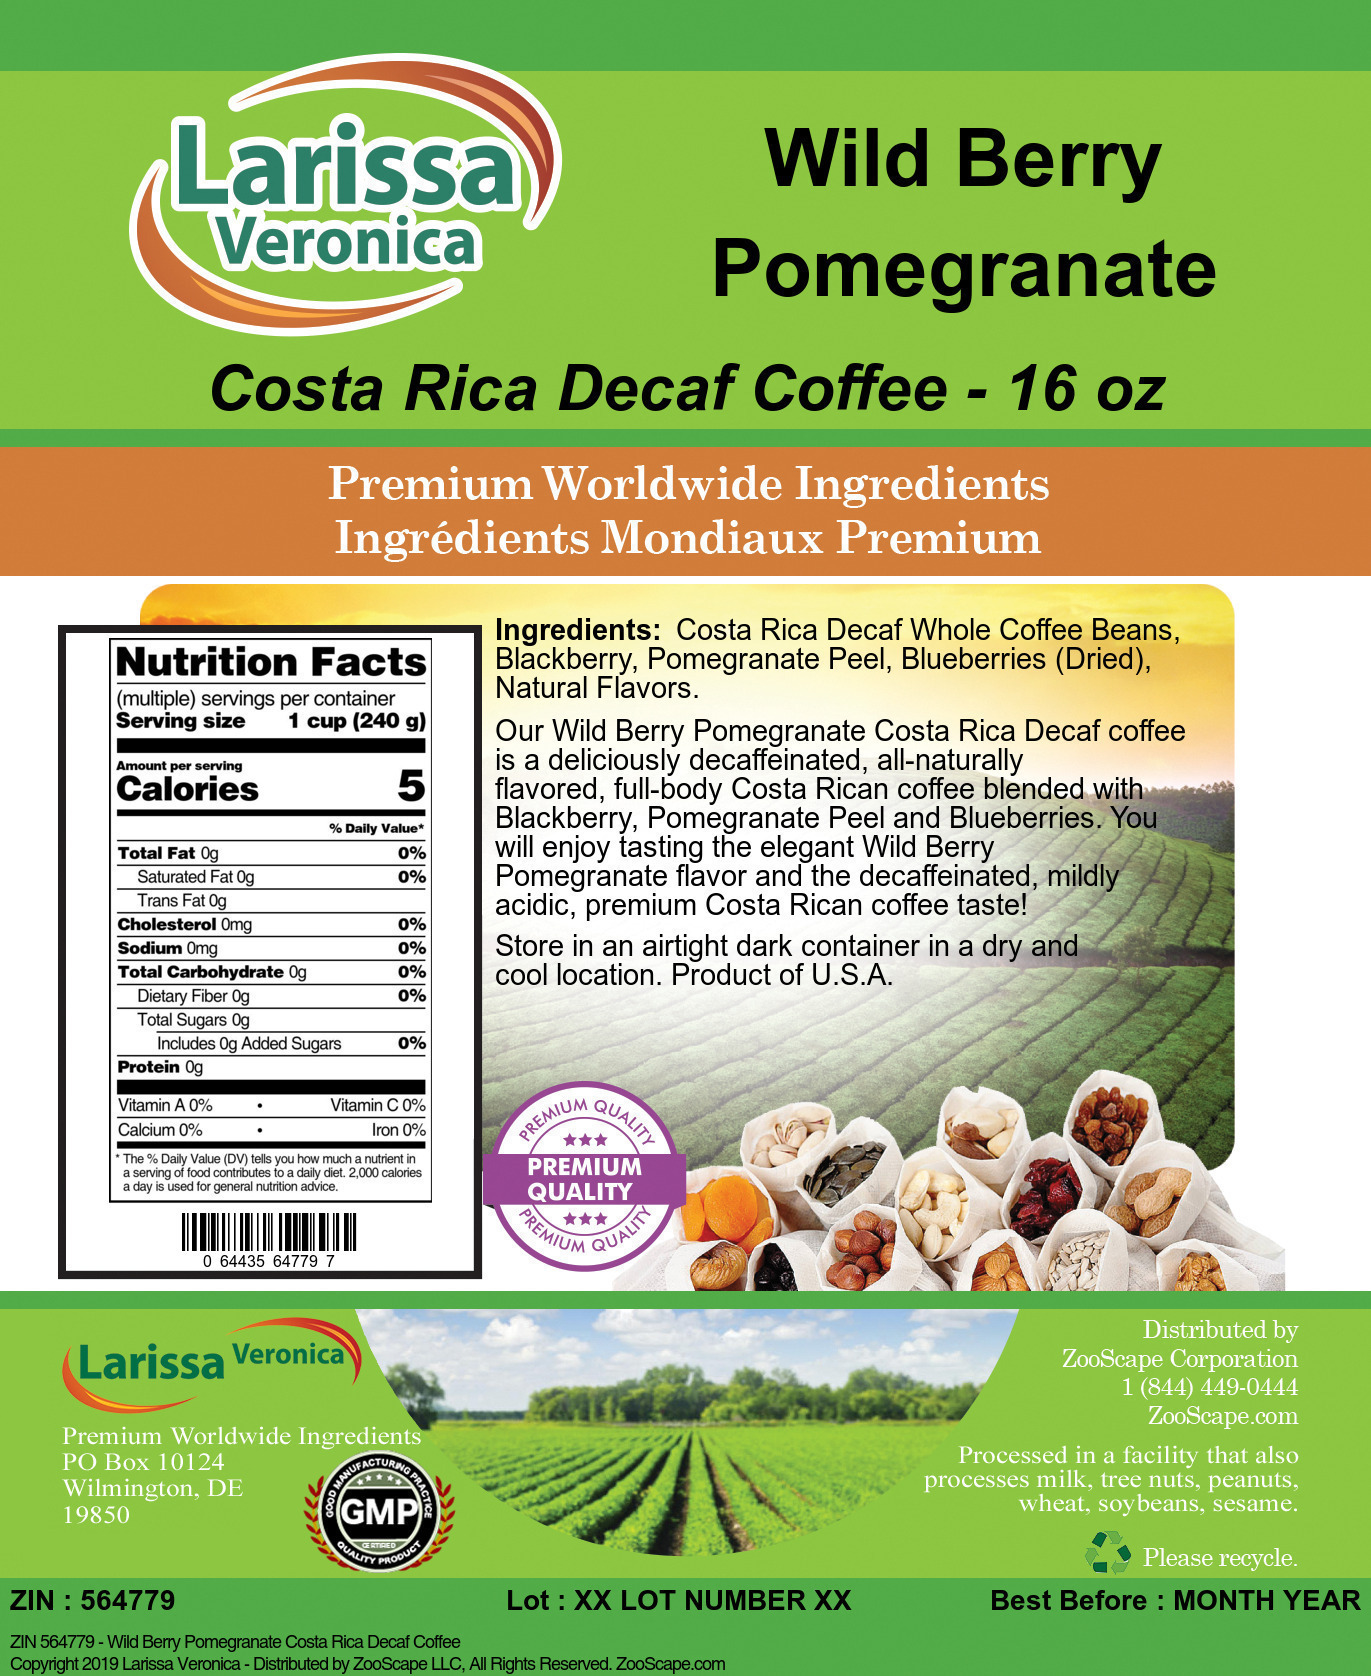 Wild Berry Pomegranate Costa Rica Decaf Coffee - Label